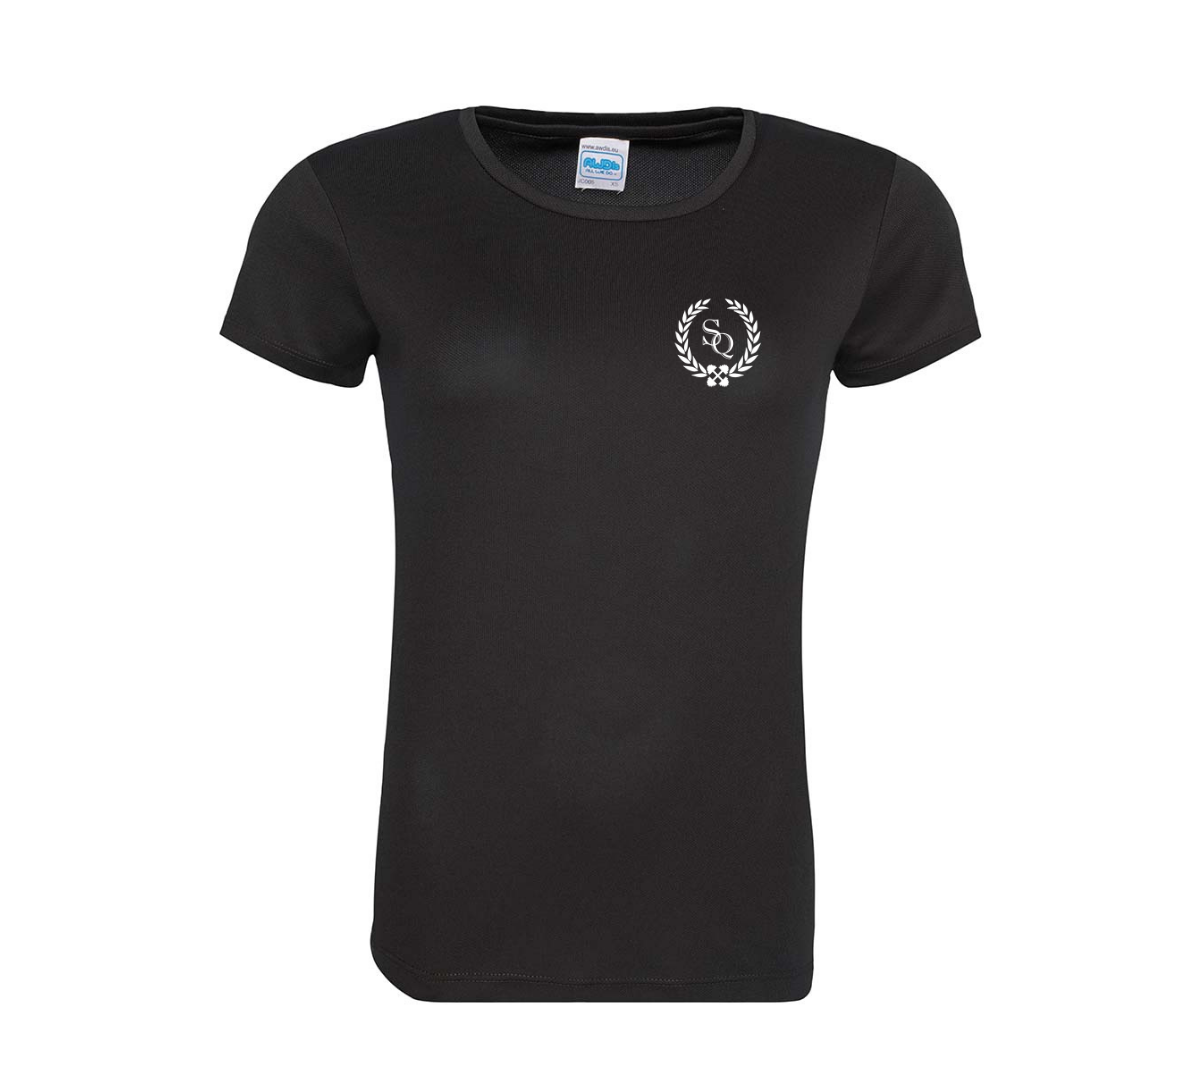 The Shredquarters Cannon Street Ladies Training T-Shirt